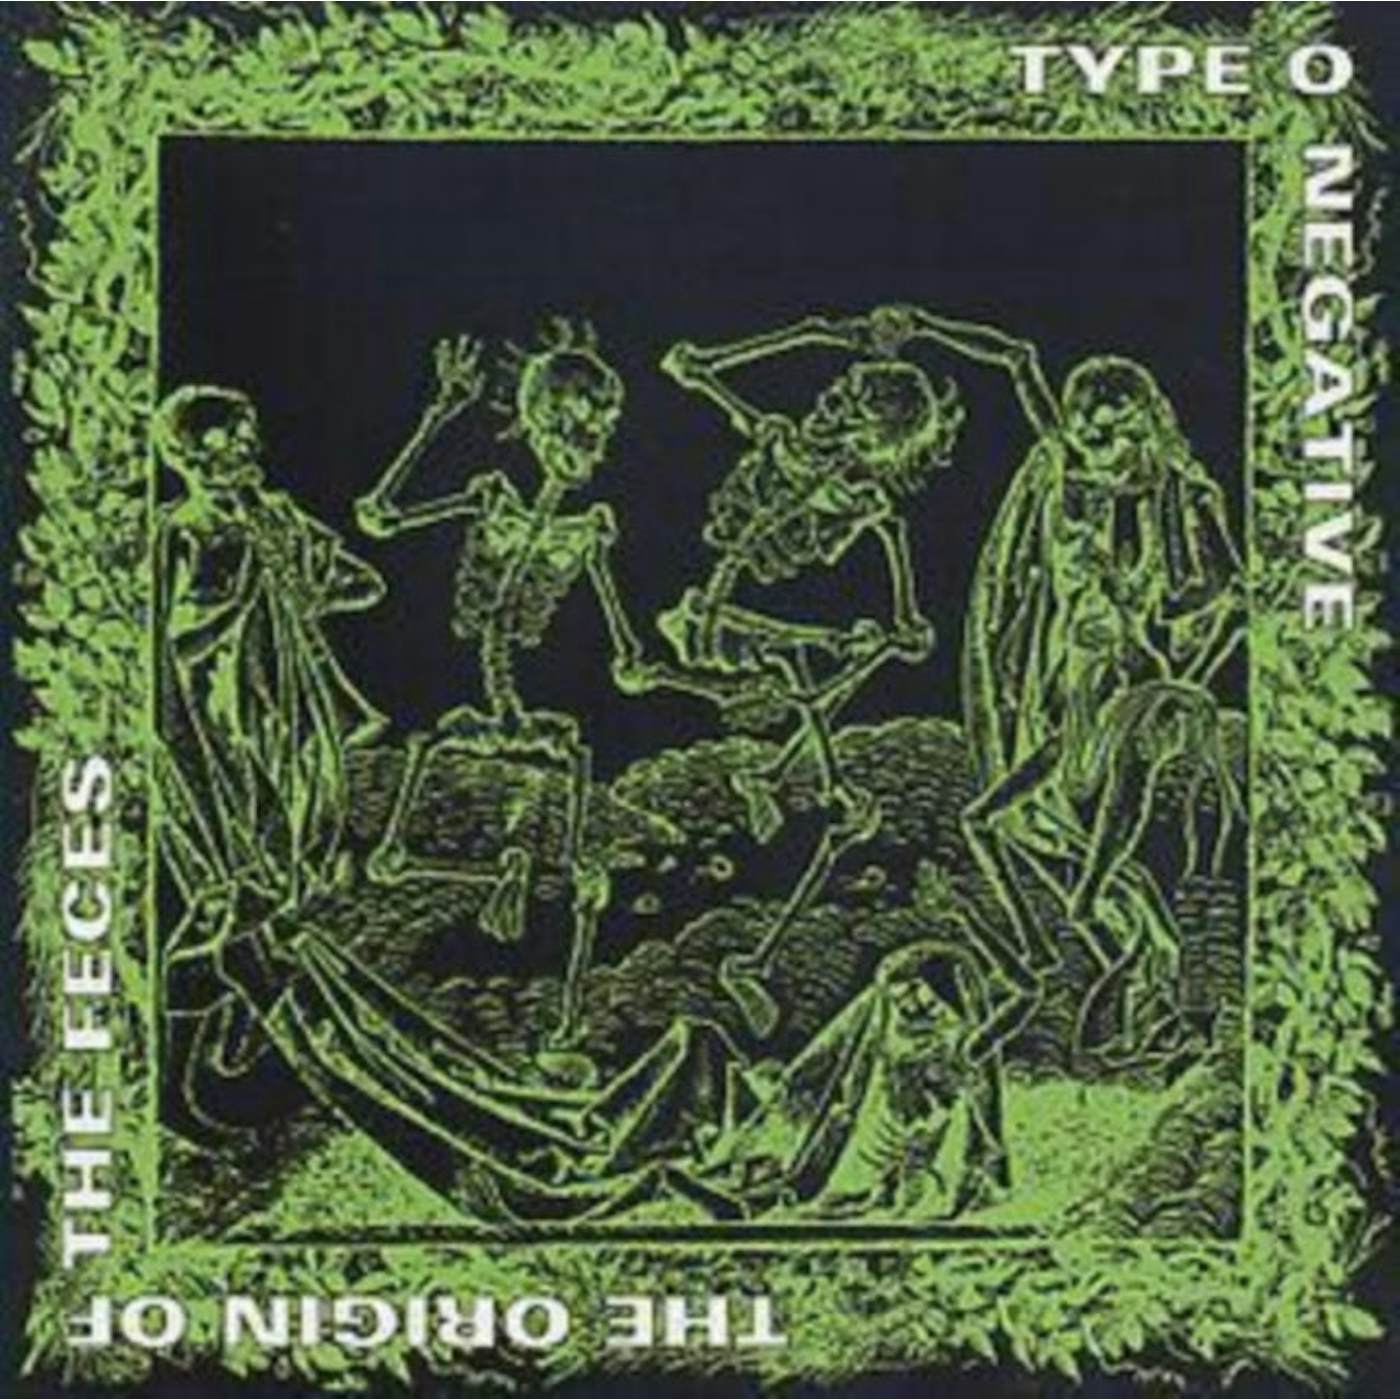 Type O Negative CD - The Origin Of The Feces